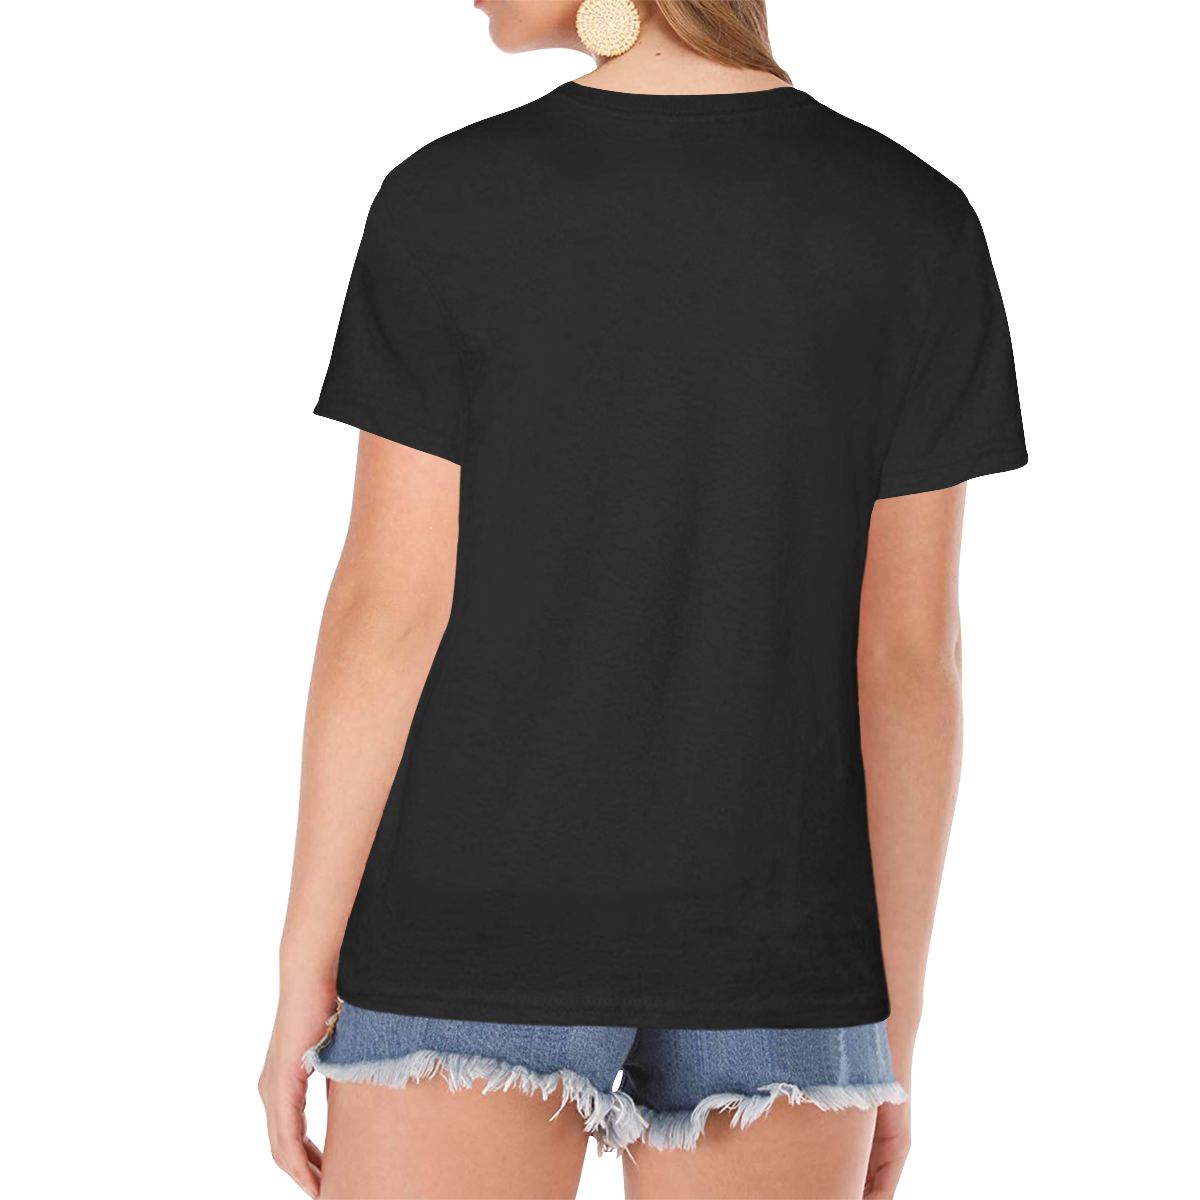 Turkey style Women's Raglan T-Shirt/Front Printing (Model T62)